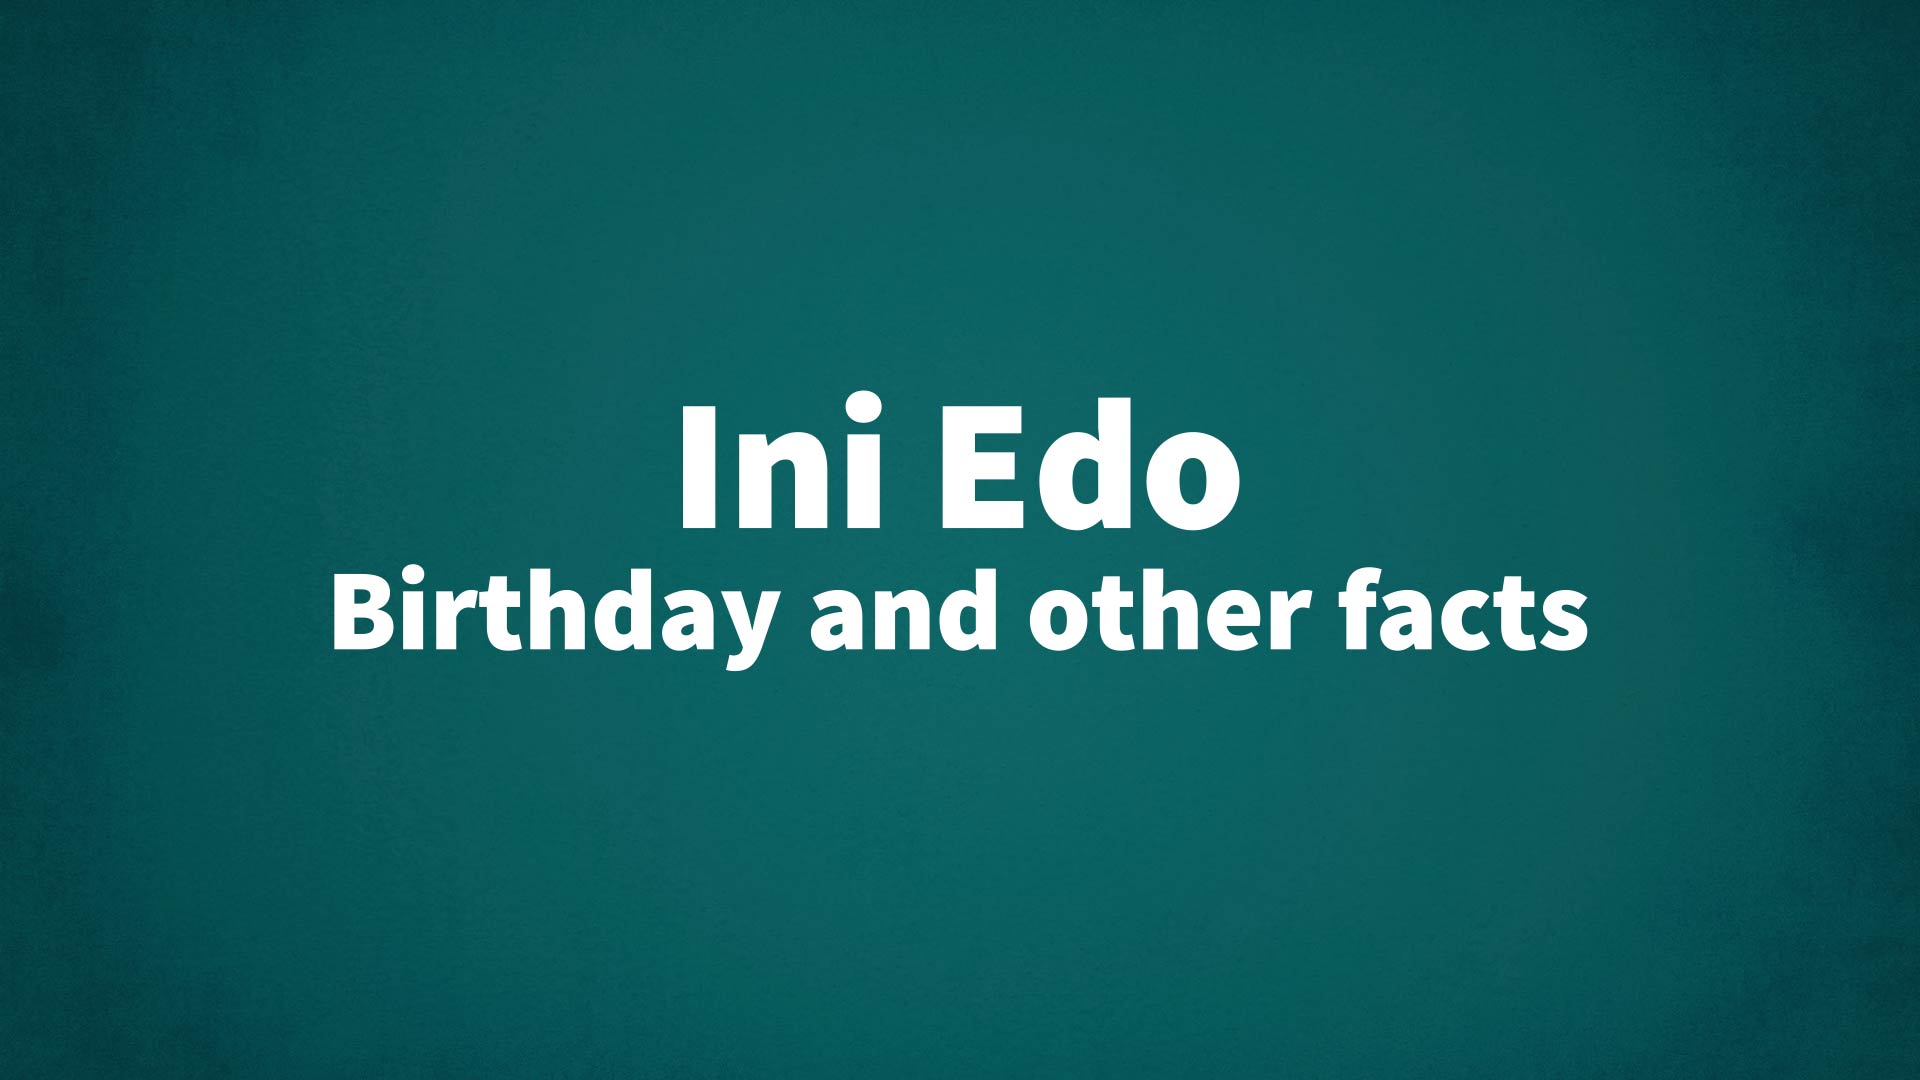 title image for Ini Edo birthday